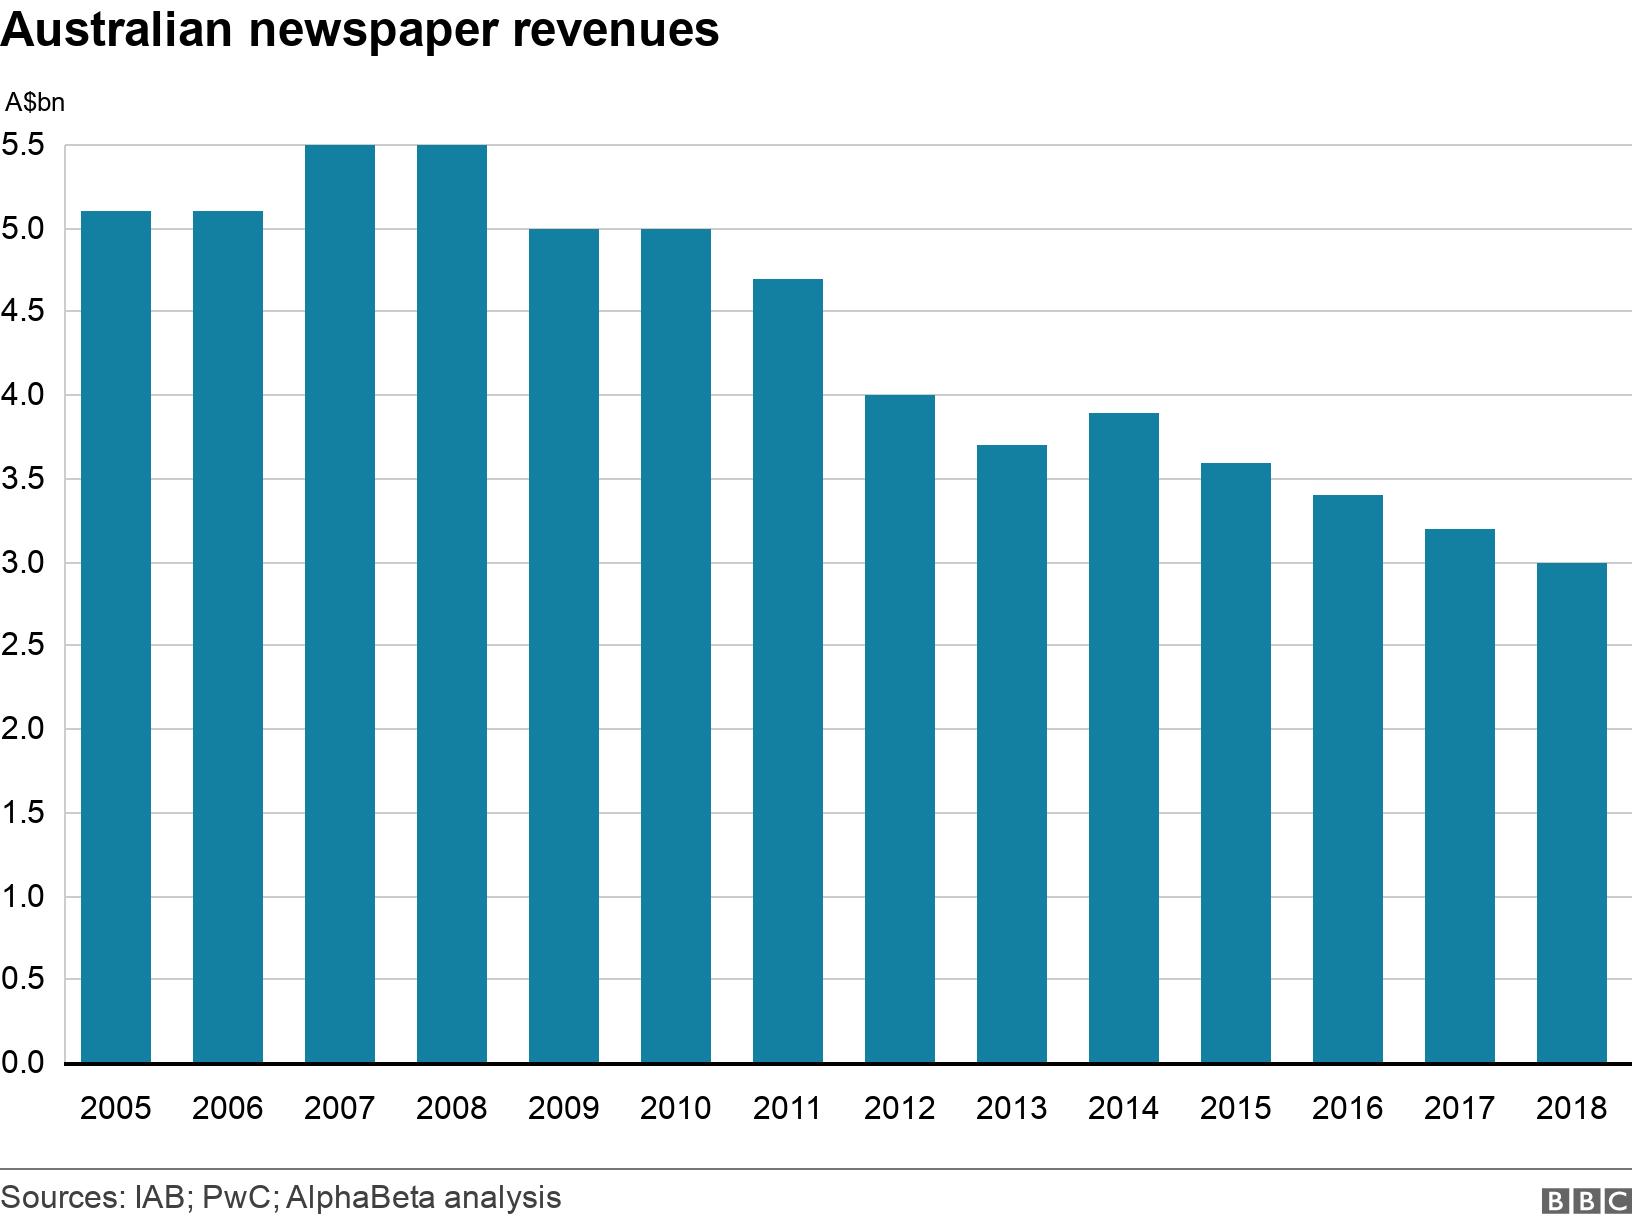 Australian newspaper revenues. A bar chart showing Australian newspaper revenues over time. .